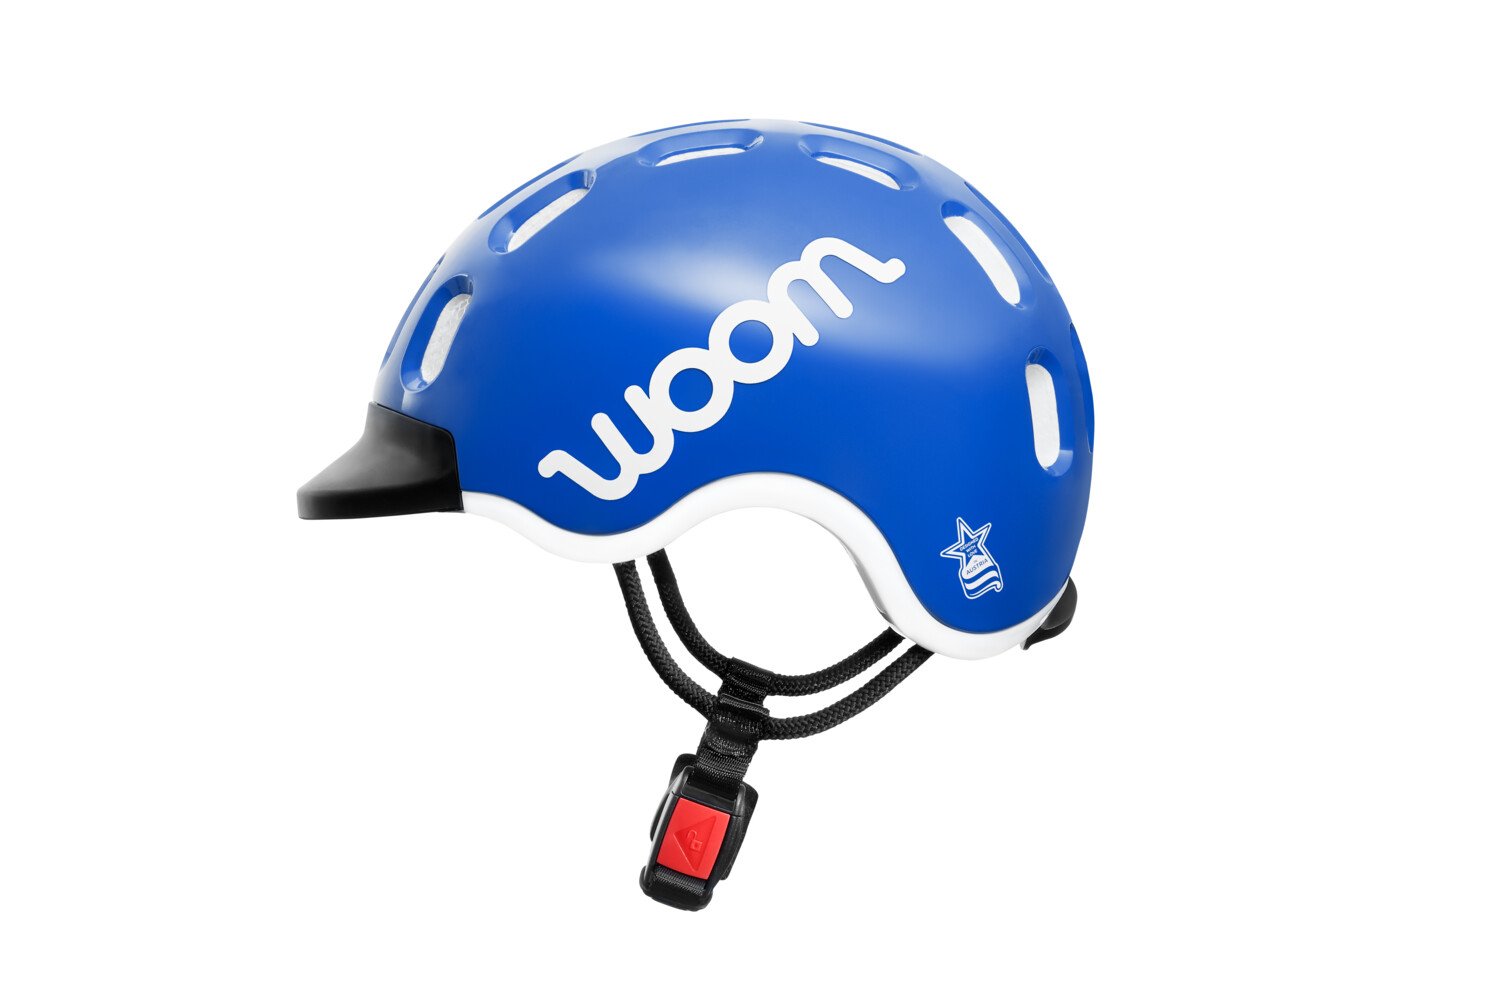 Blue KIDS' Helmet from woom with black visor and white woom logo.